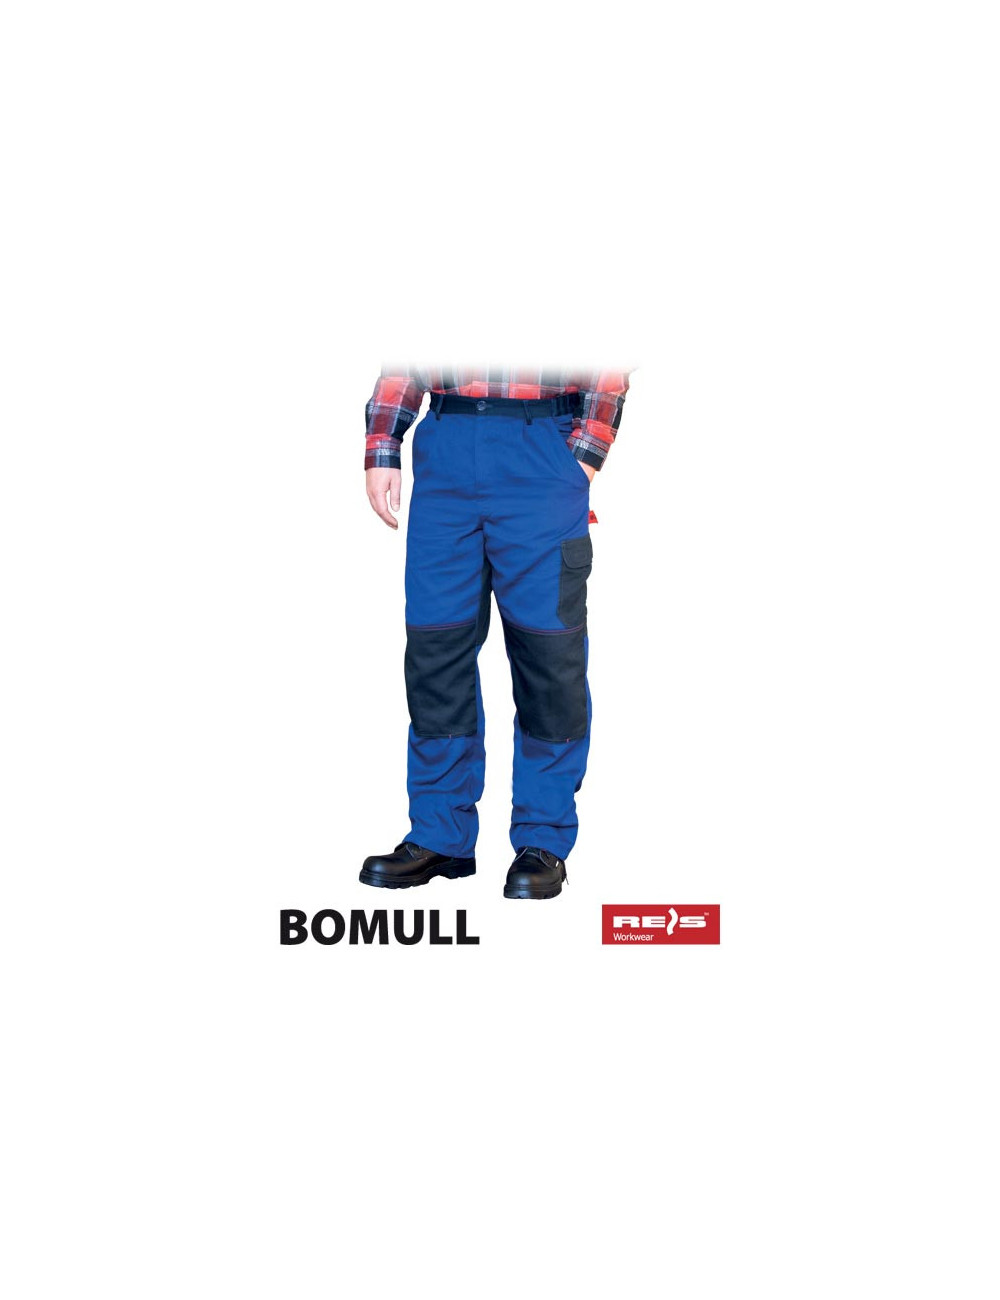 Bomull-t ng hüftlange Schutzhose, Blau und Marineblau, Reis